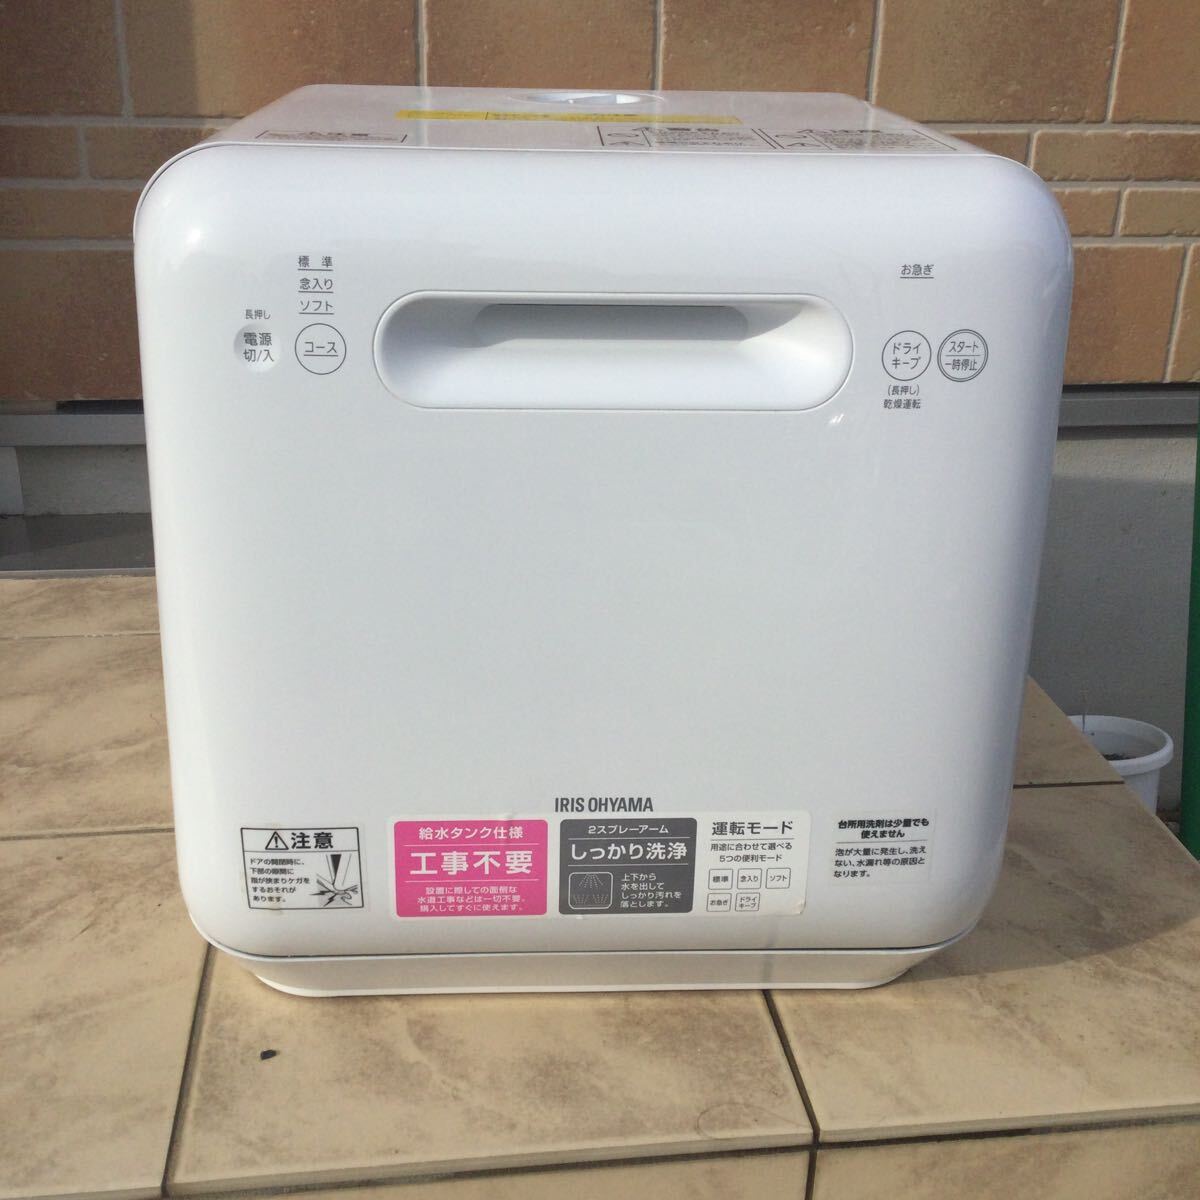 IRIS OHYAMA アイリスオーヤマ 食器洗い乾燥機 ISHT-5000-W 食洗機 ホワイト 2020年製 動作確認済 USED品_画像1